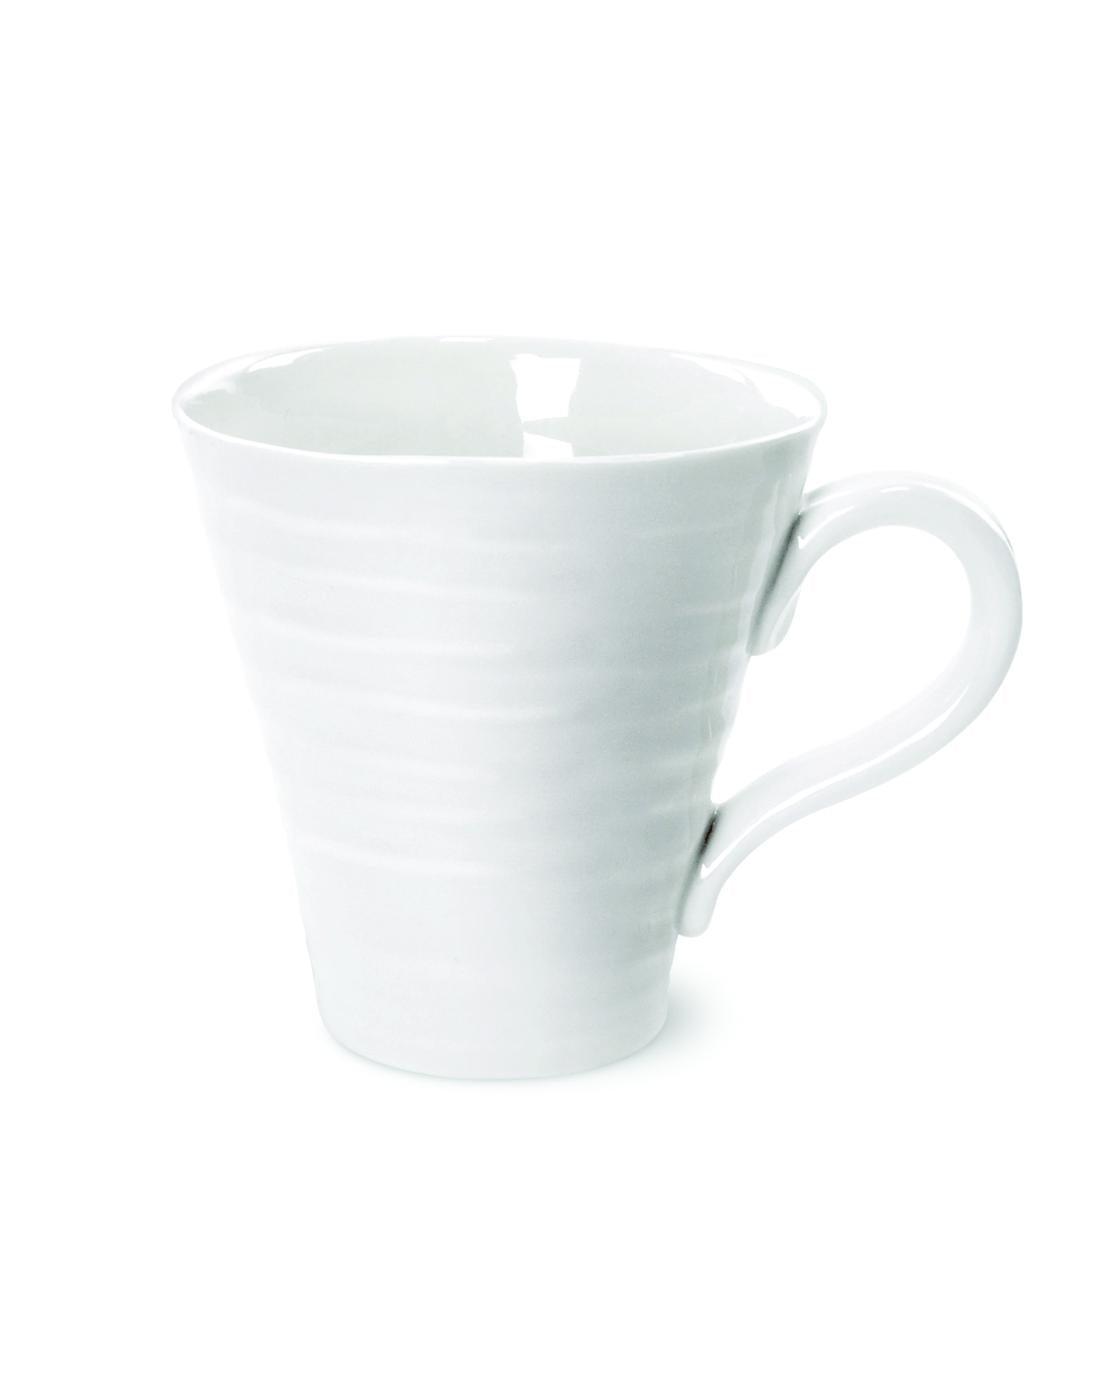 mug with curved handle.